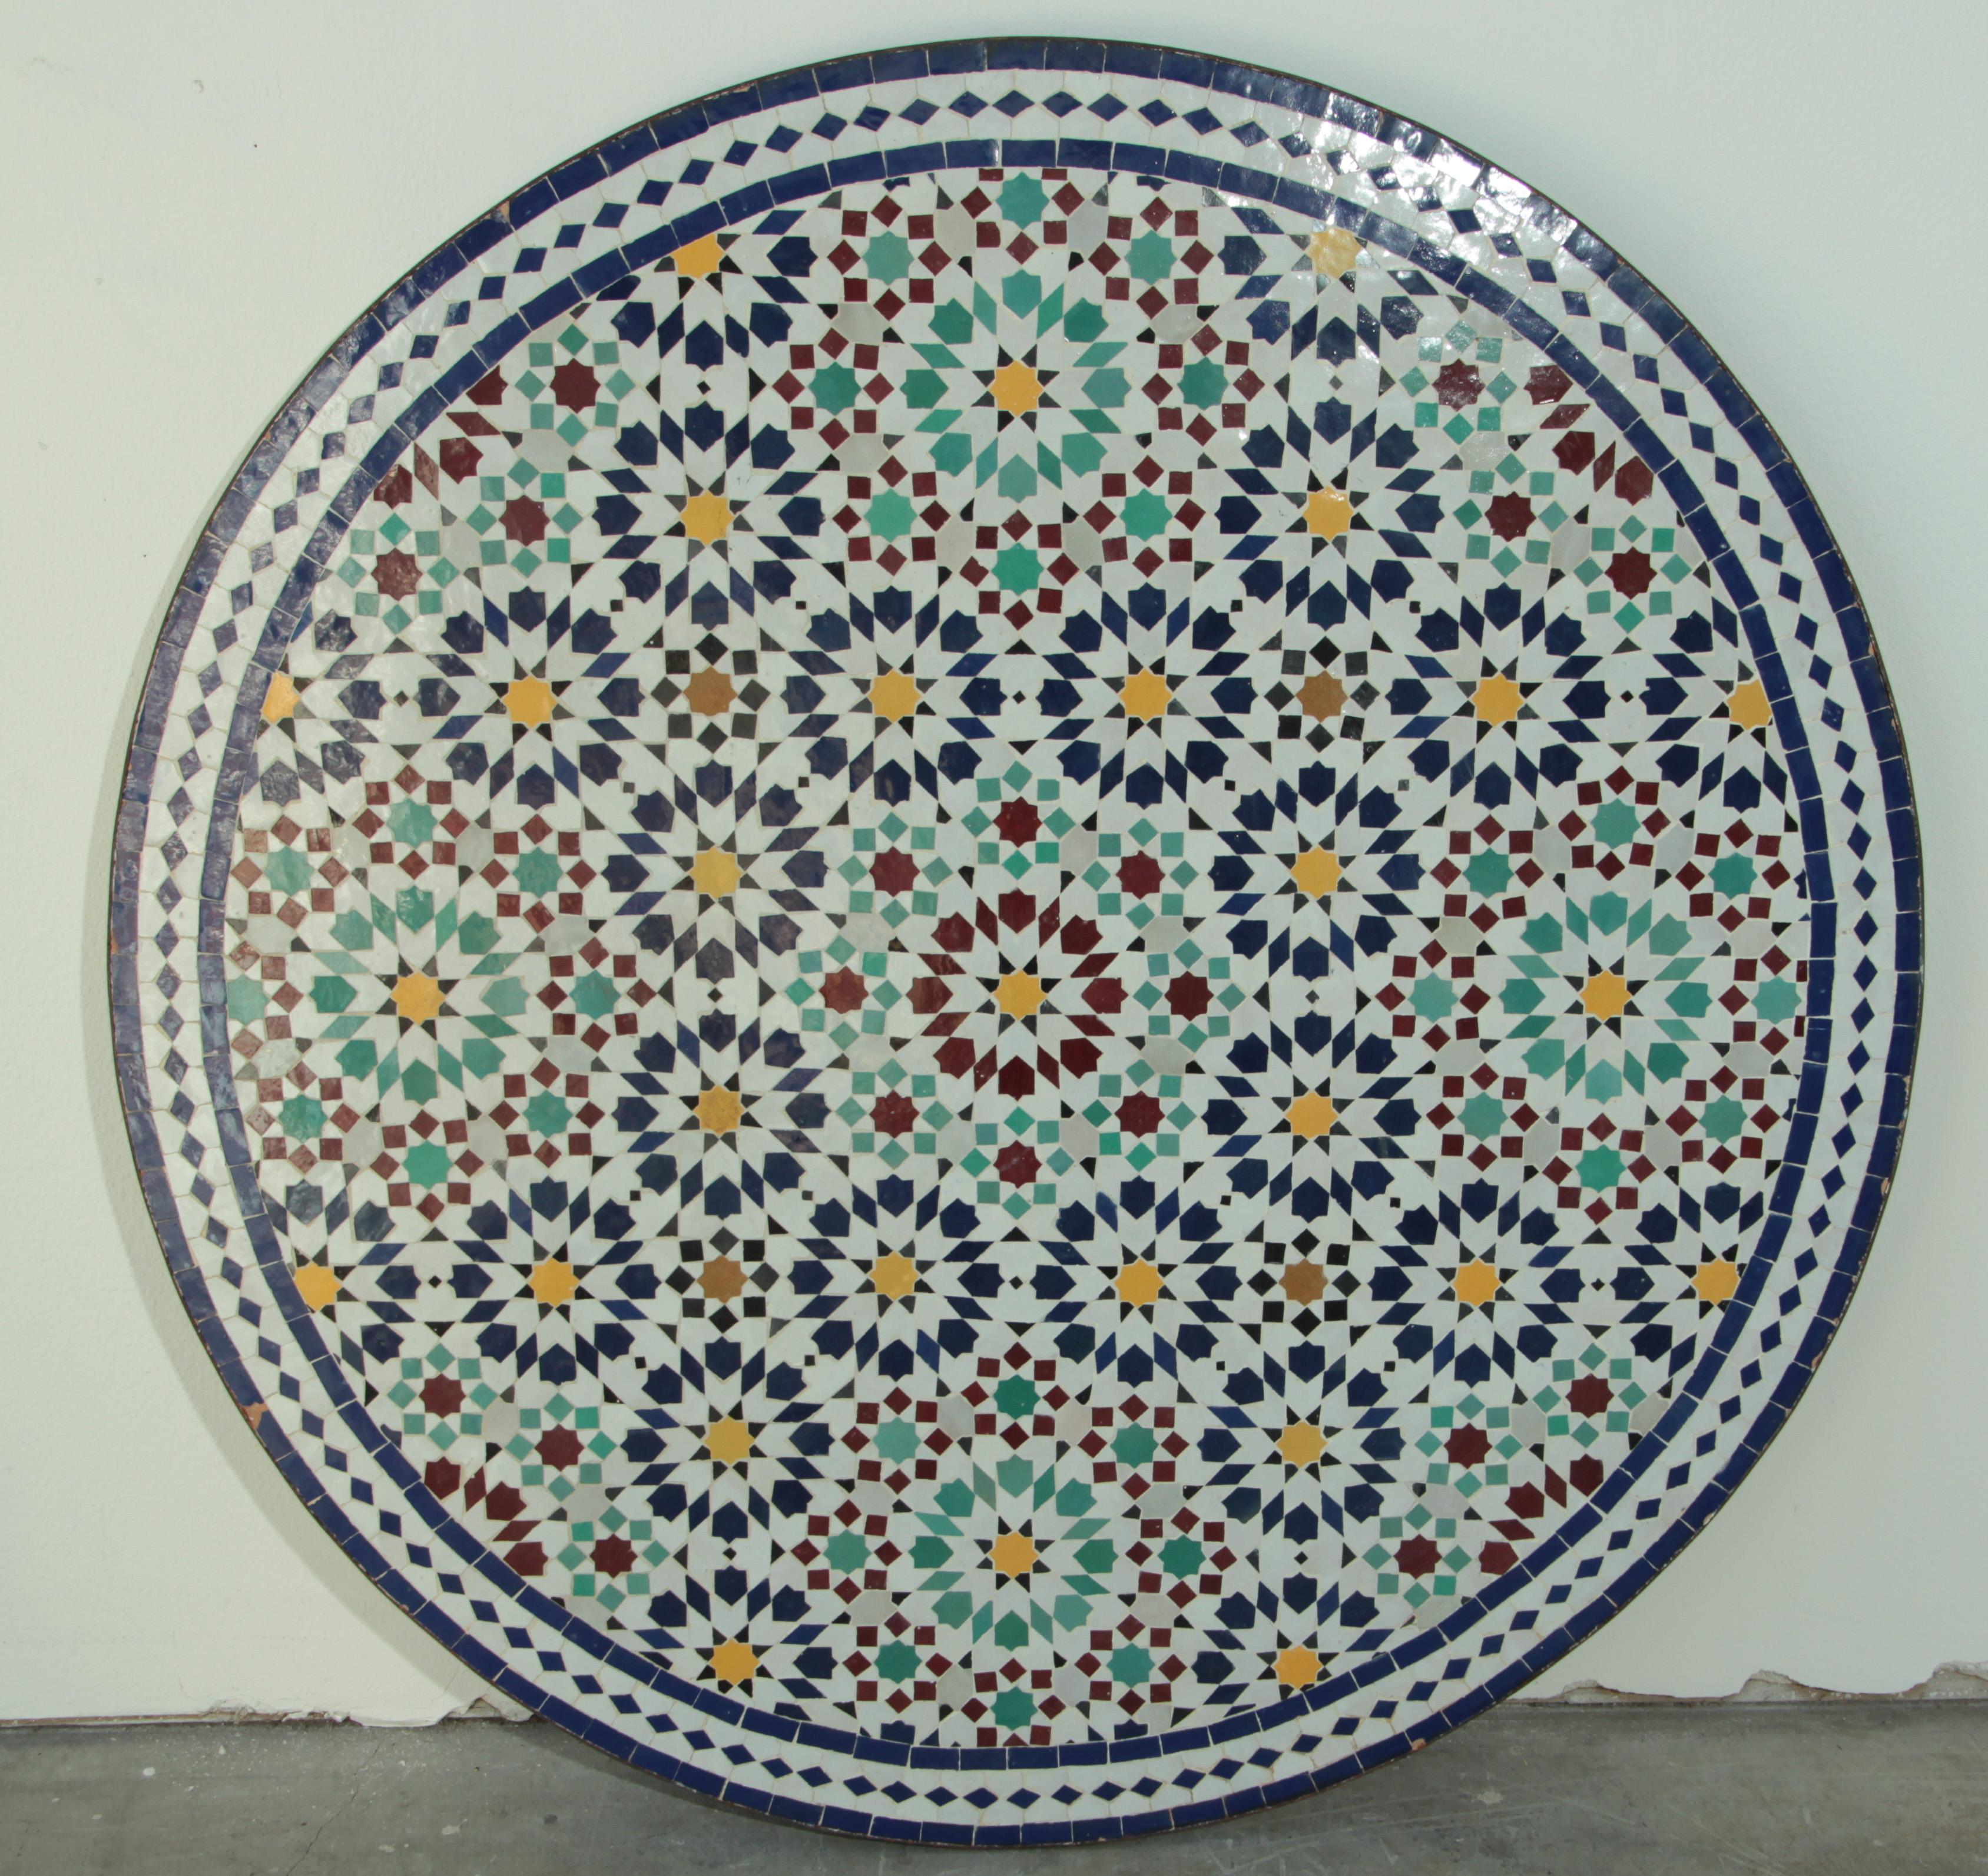 Inlay Moroccan Mosaic Patio Table in Fez Moorish Design